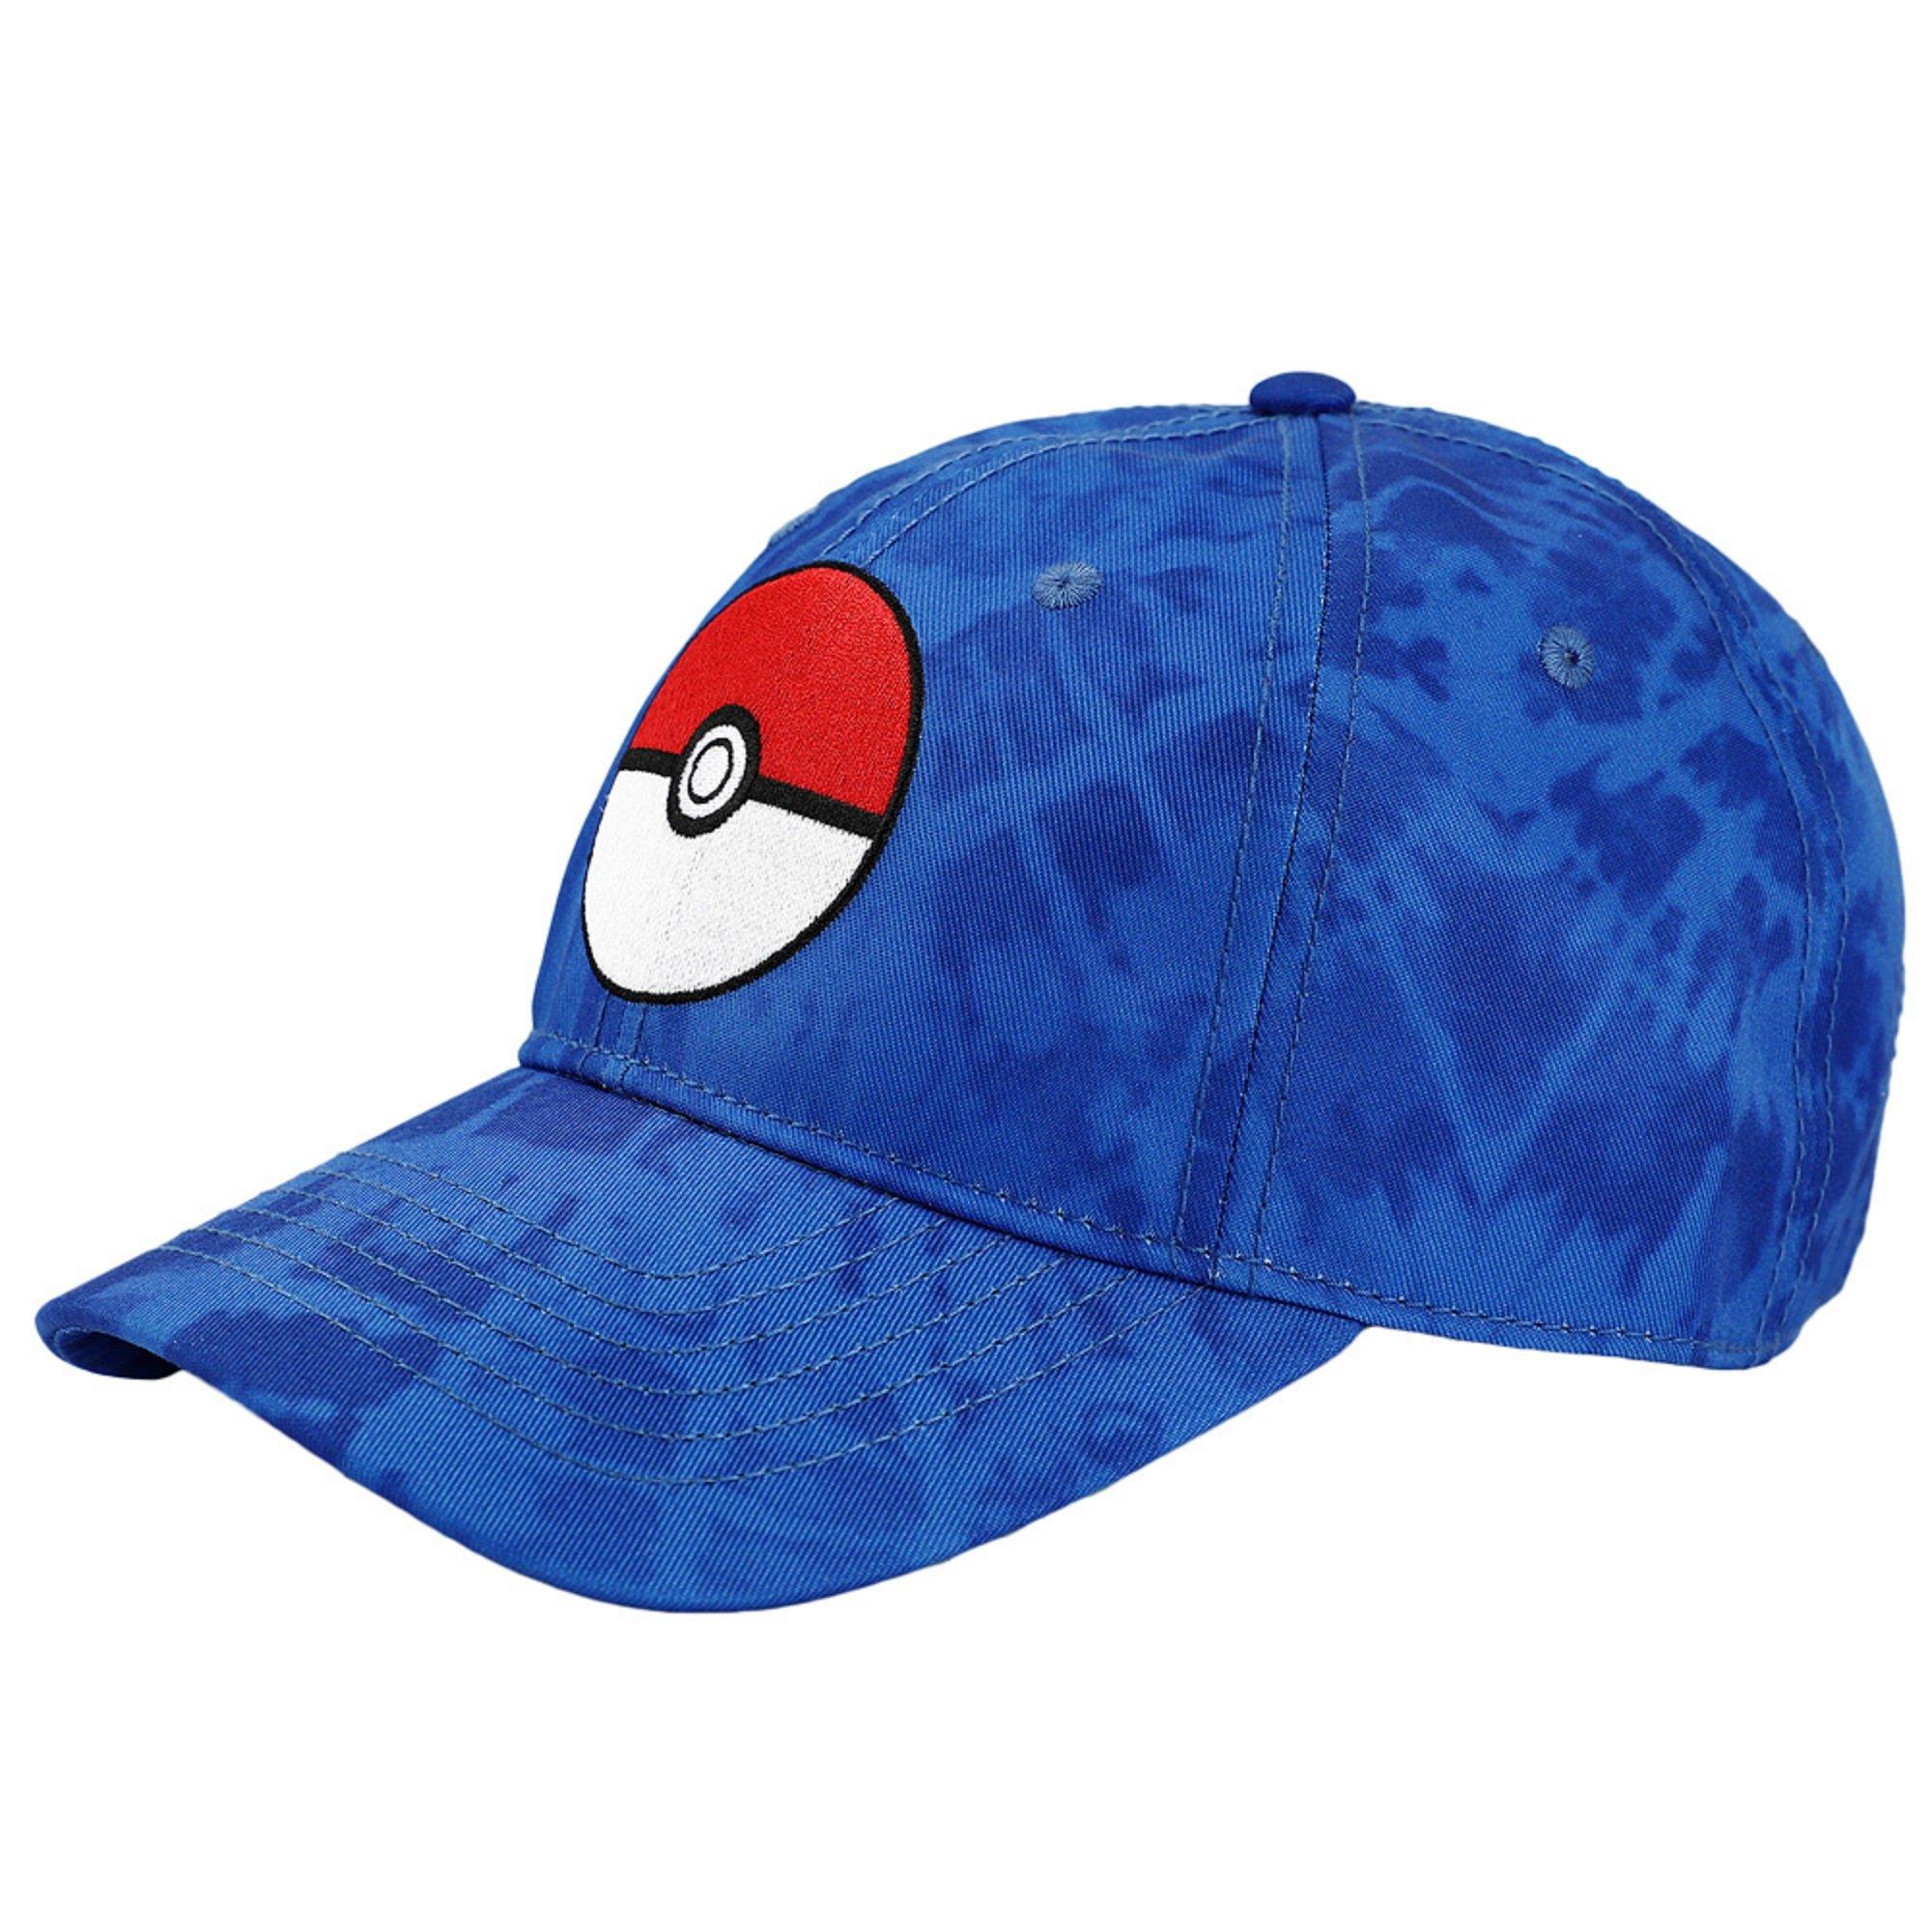 Pokeball Embroidered Blue Tie Dye Men's Cotton Twill Pokemon Adjustable Hat